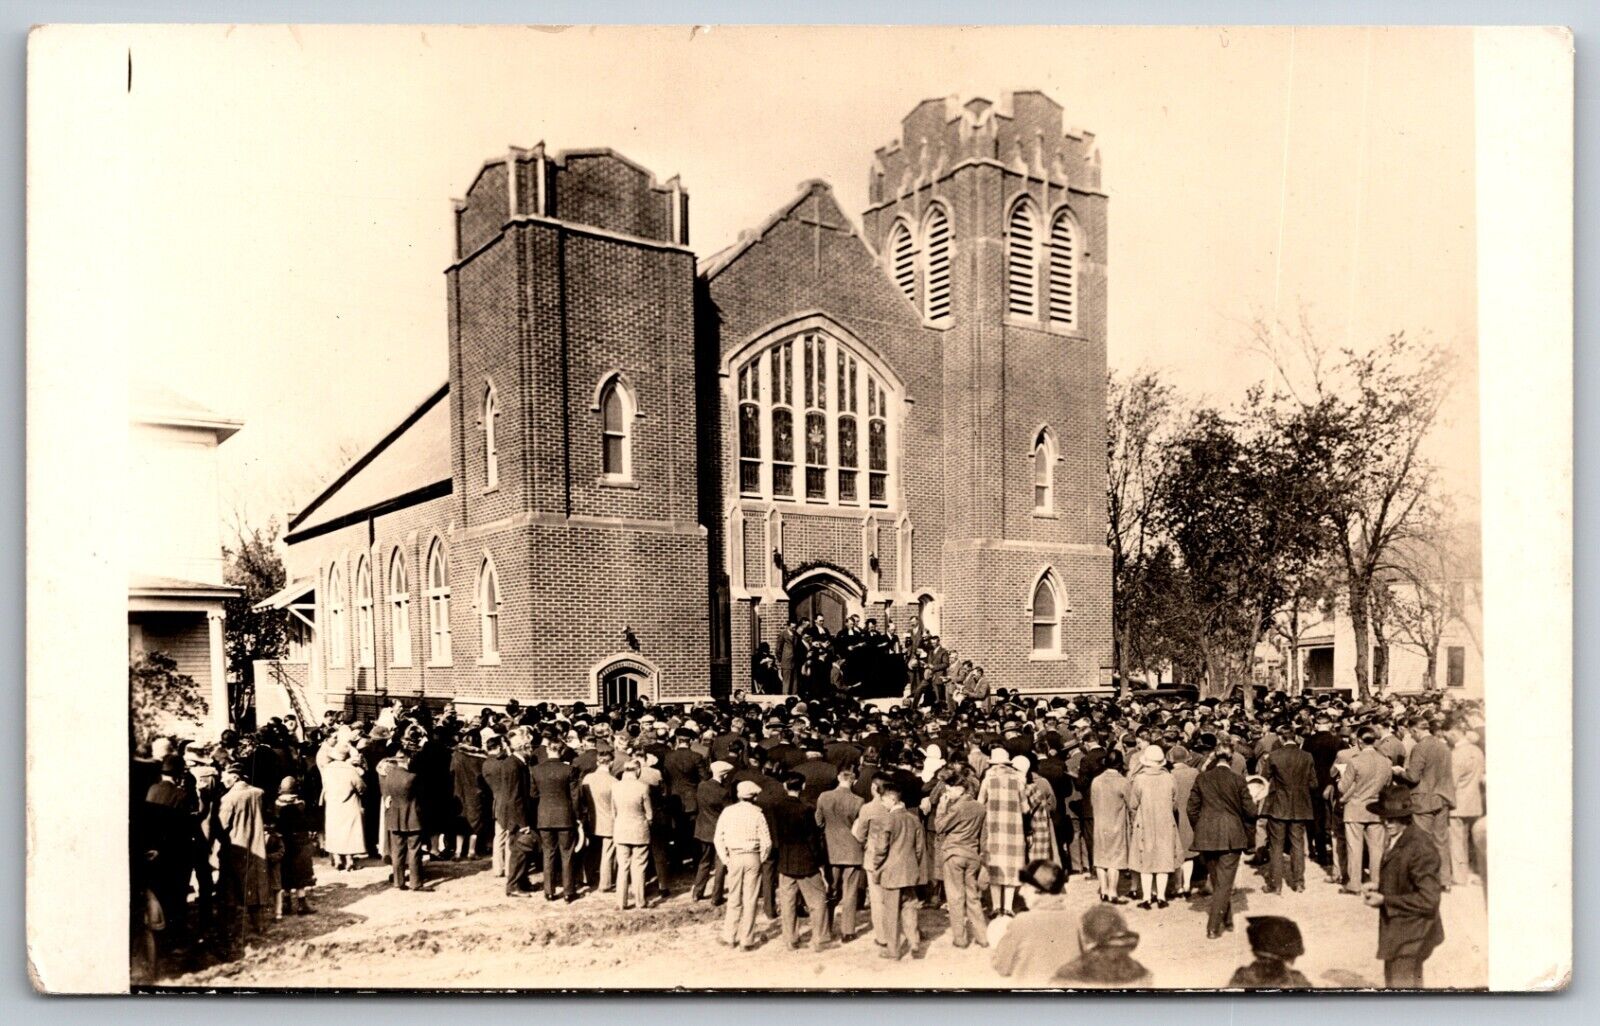 Early 1900s Crowd Outside Brick Church Dedication Perhaps? RPPC Postcard